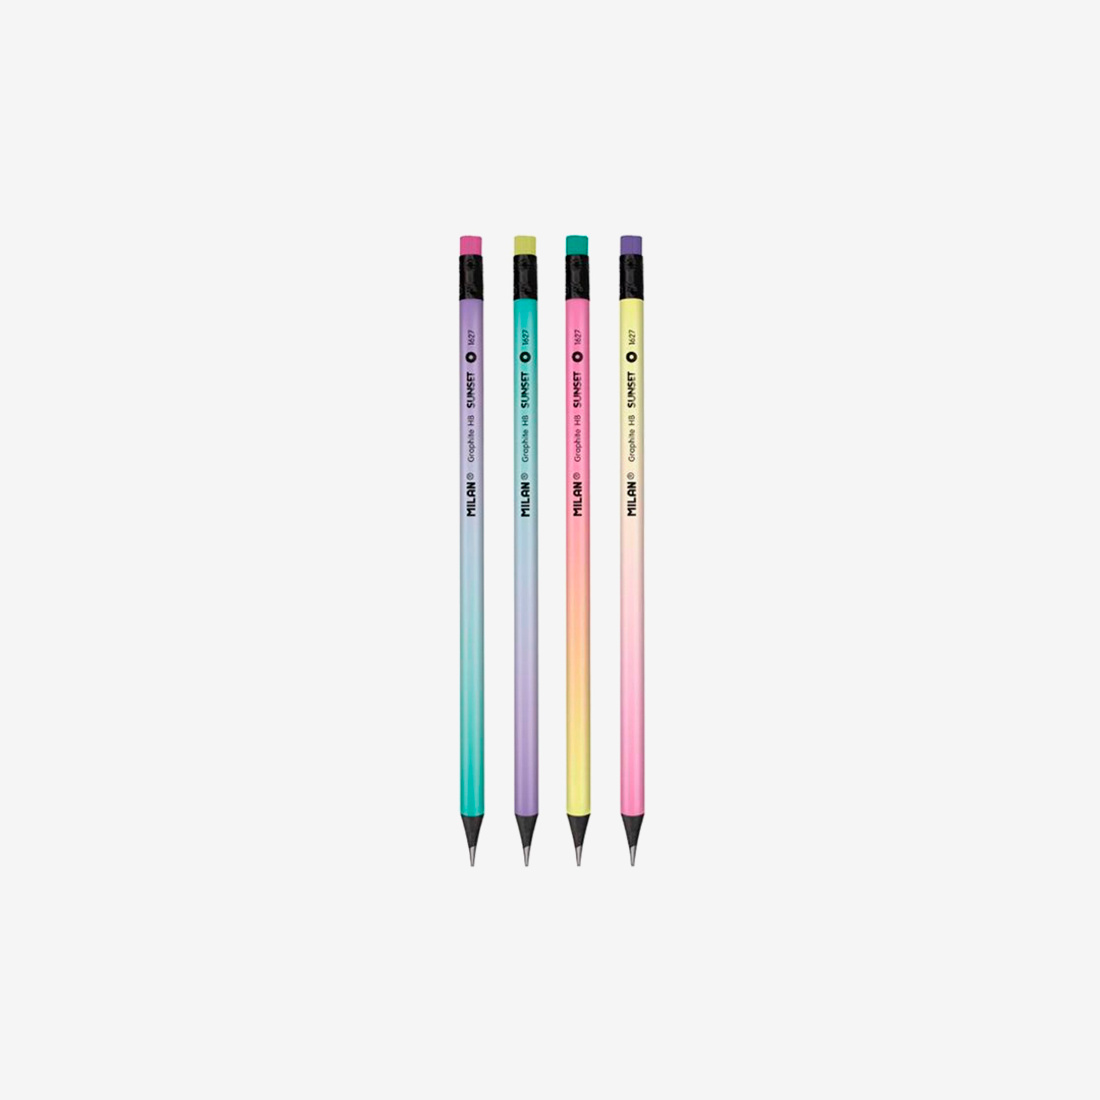 MILAN HB graphite pencil with Sunset eraser